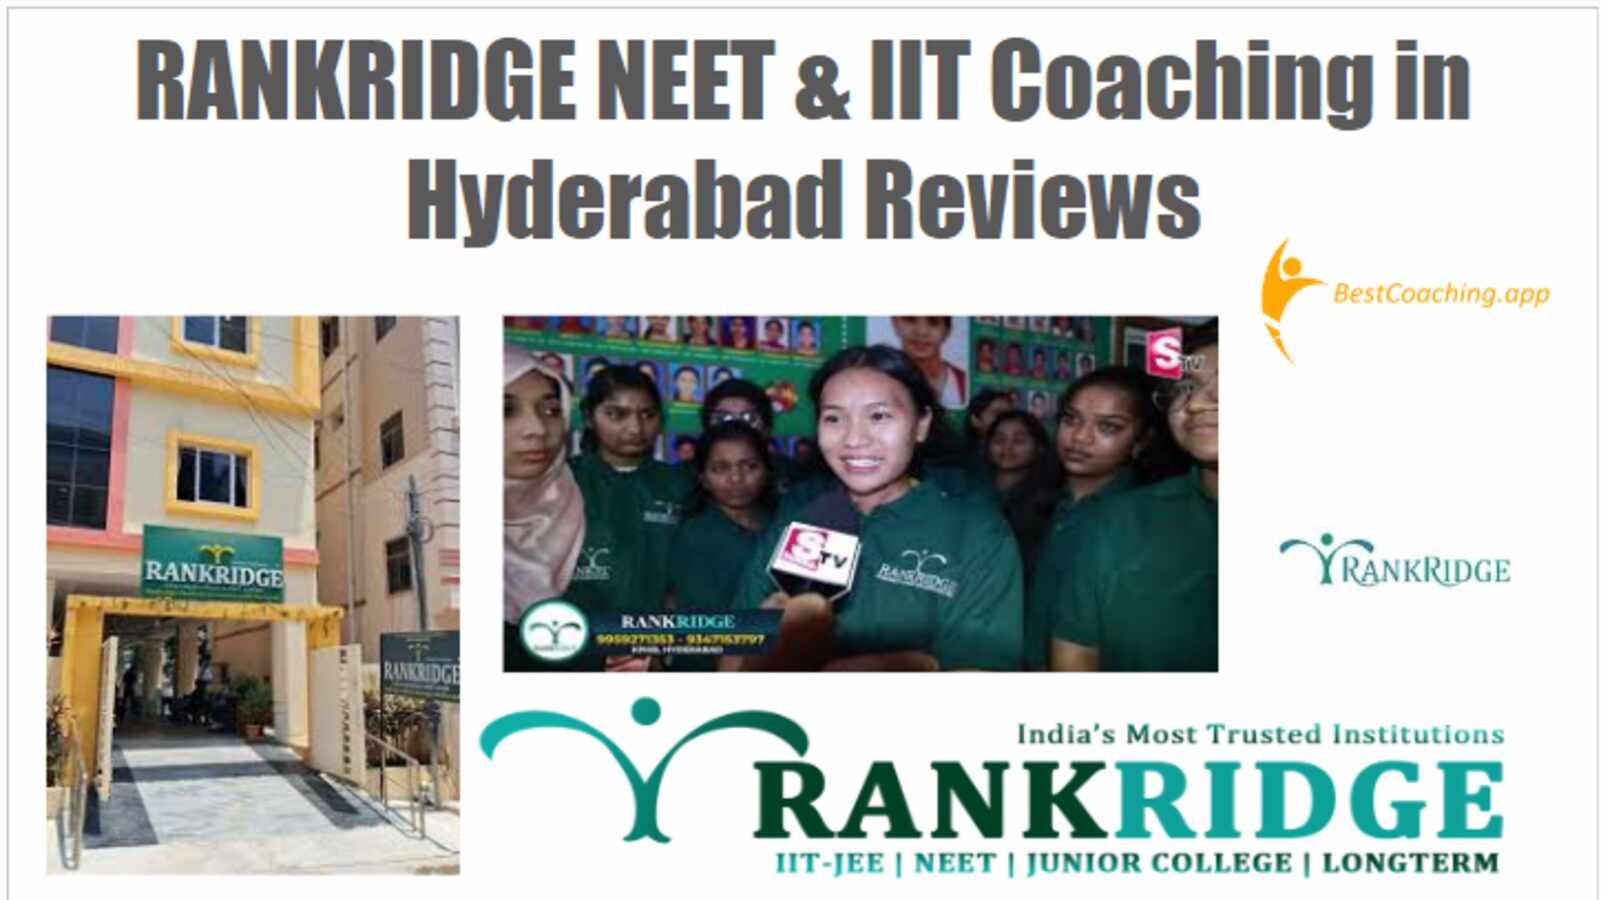 RANKRIDGE NEET & IIT Coaching in Hyderabad